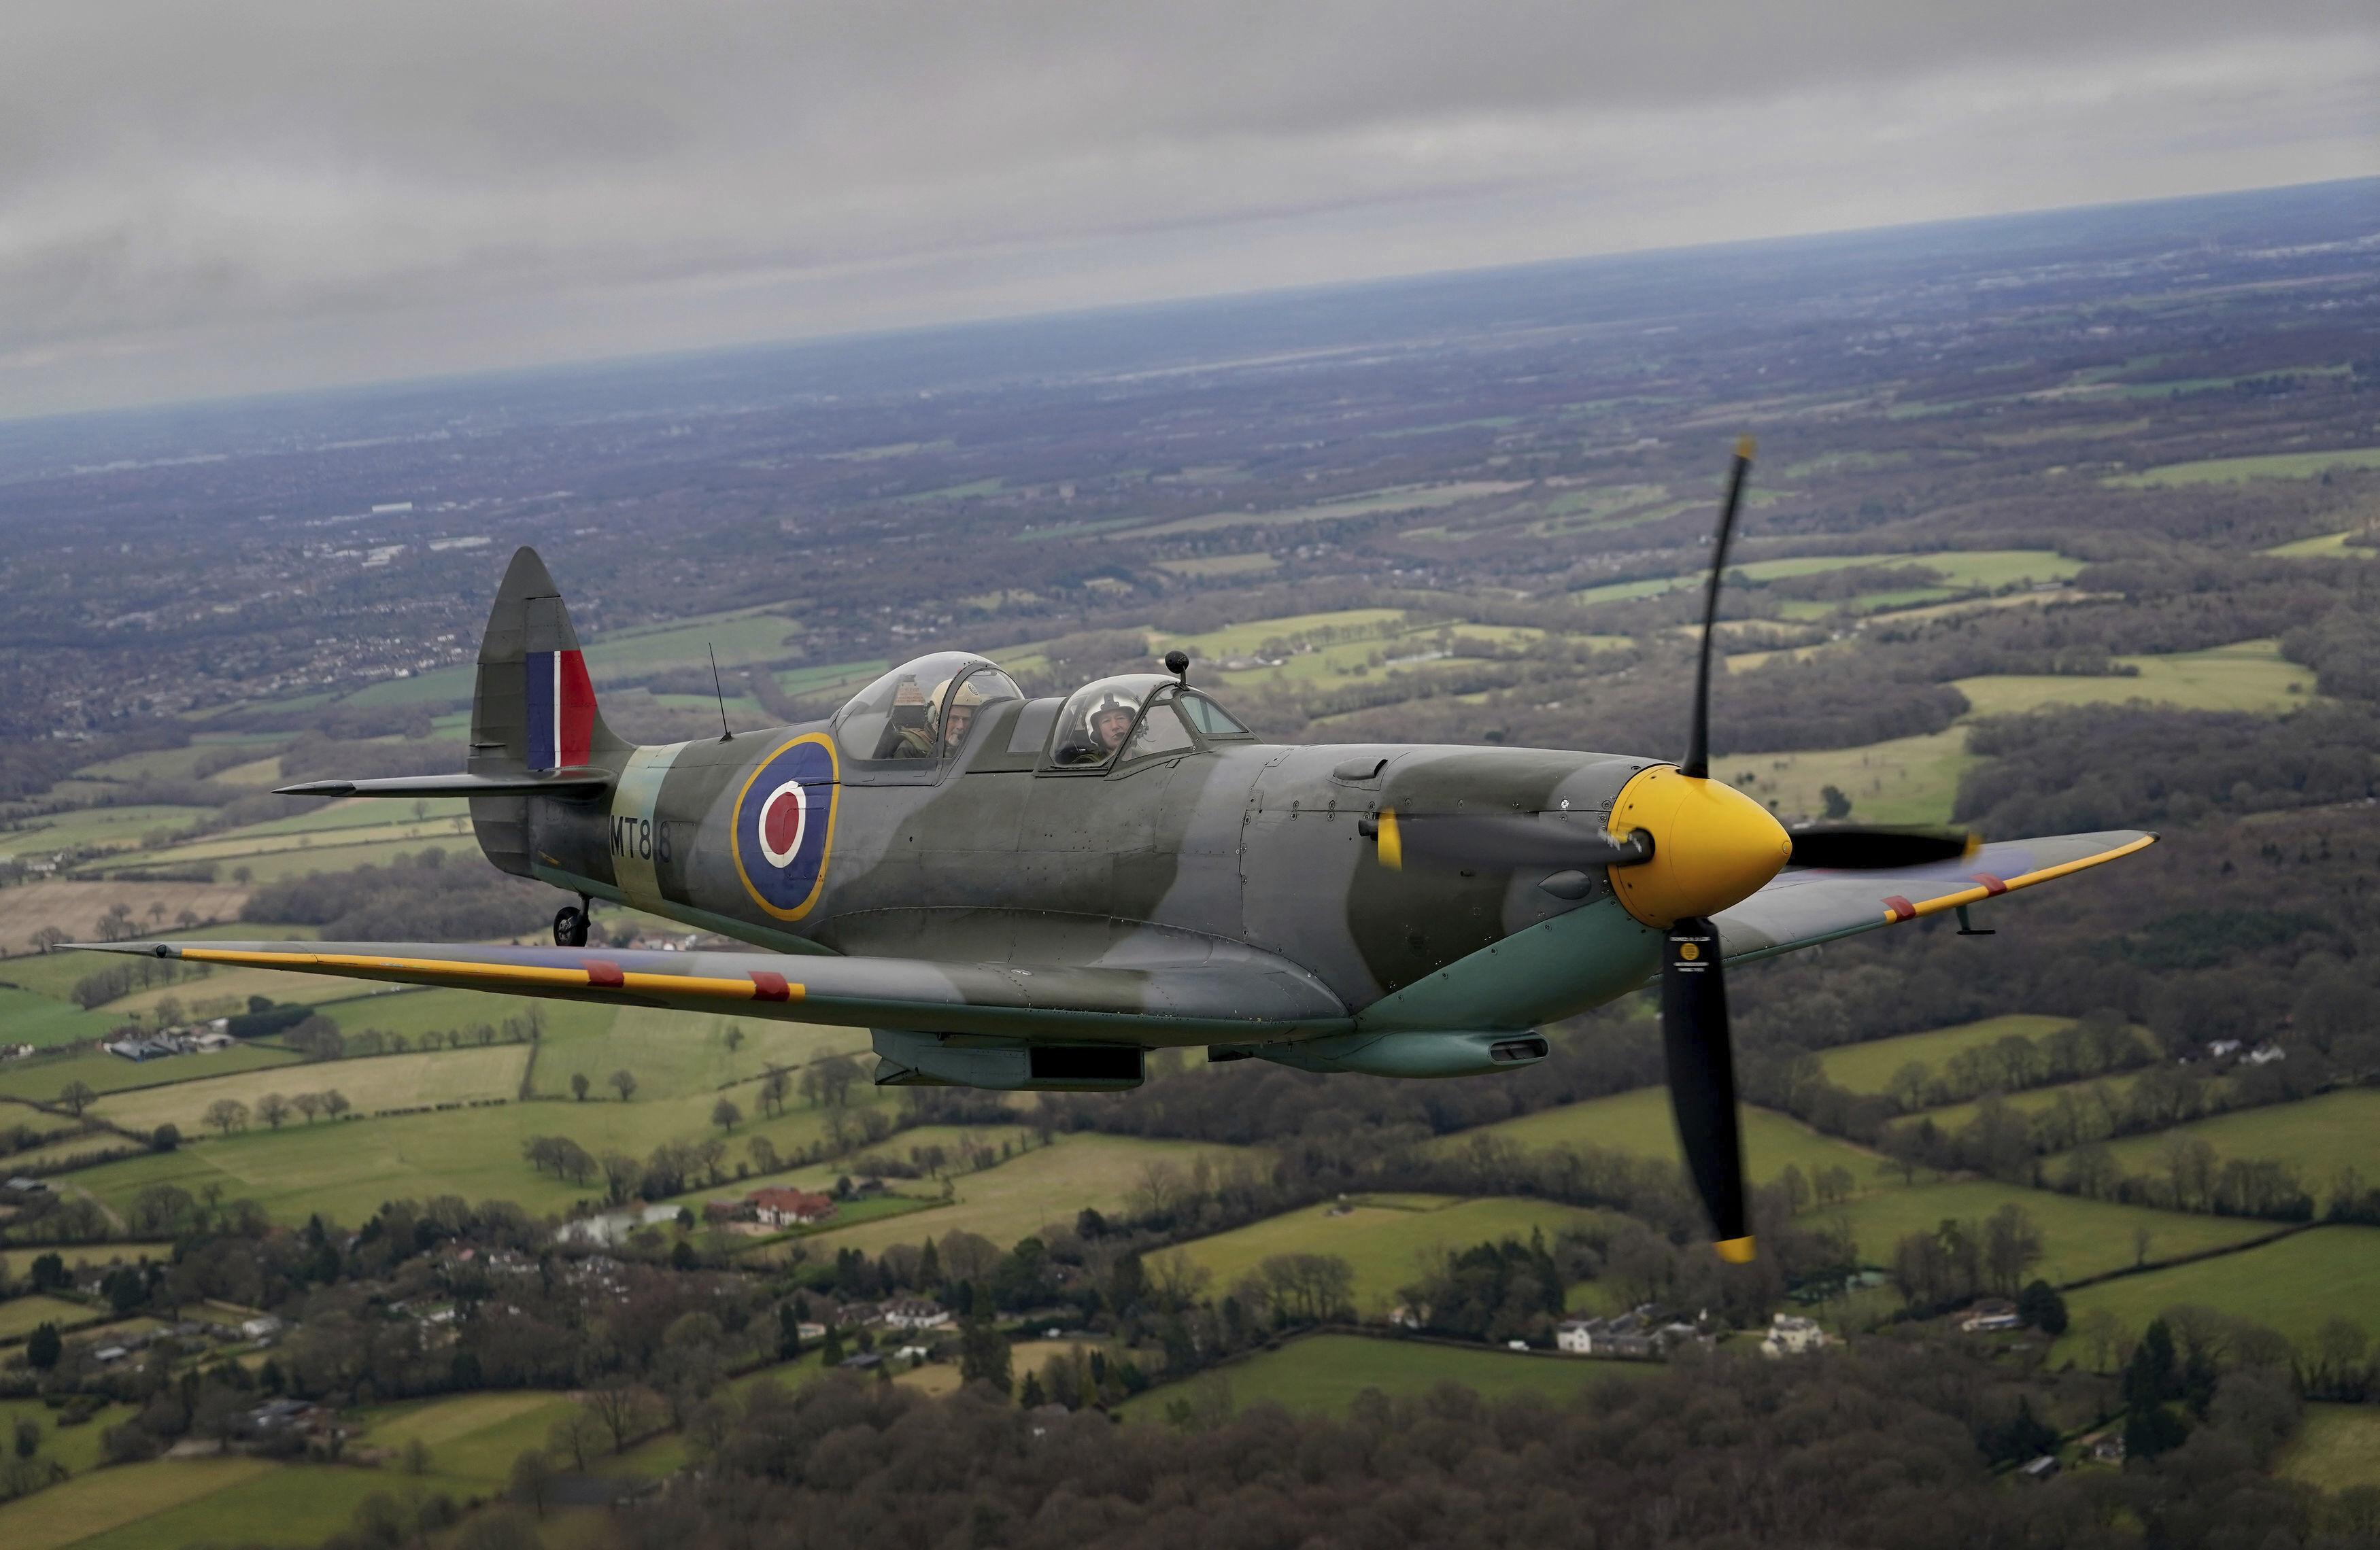 Veteran WWII pilot takes to the skies